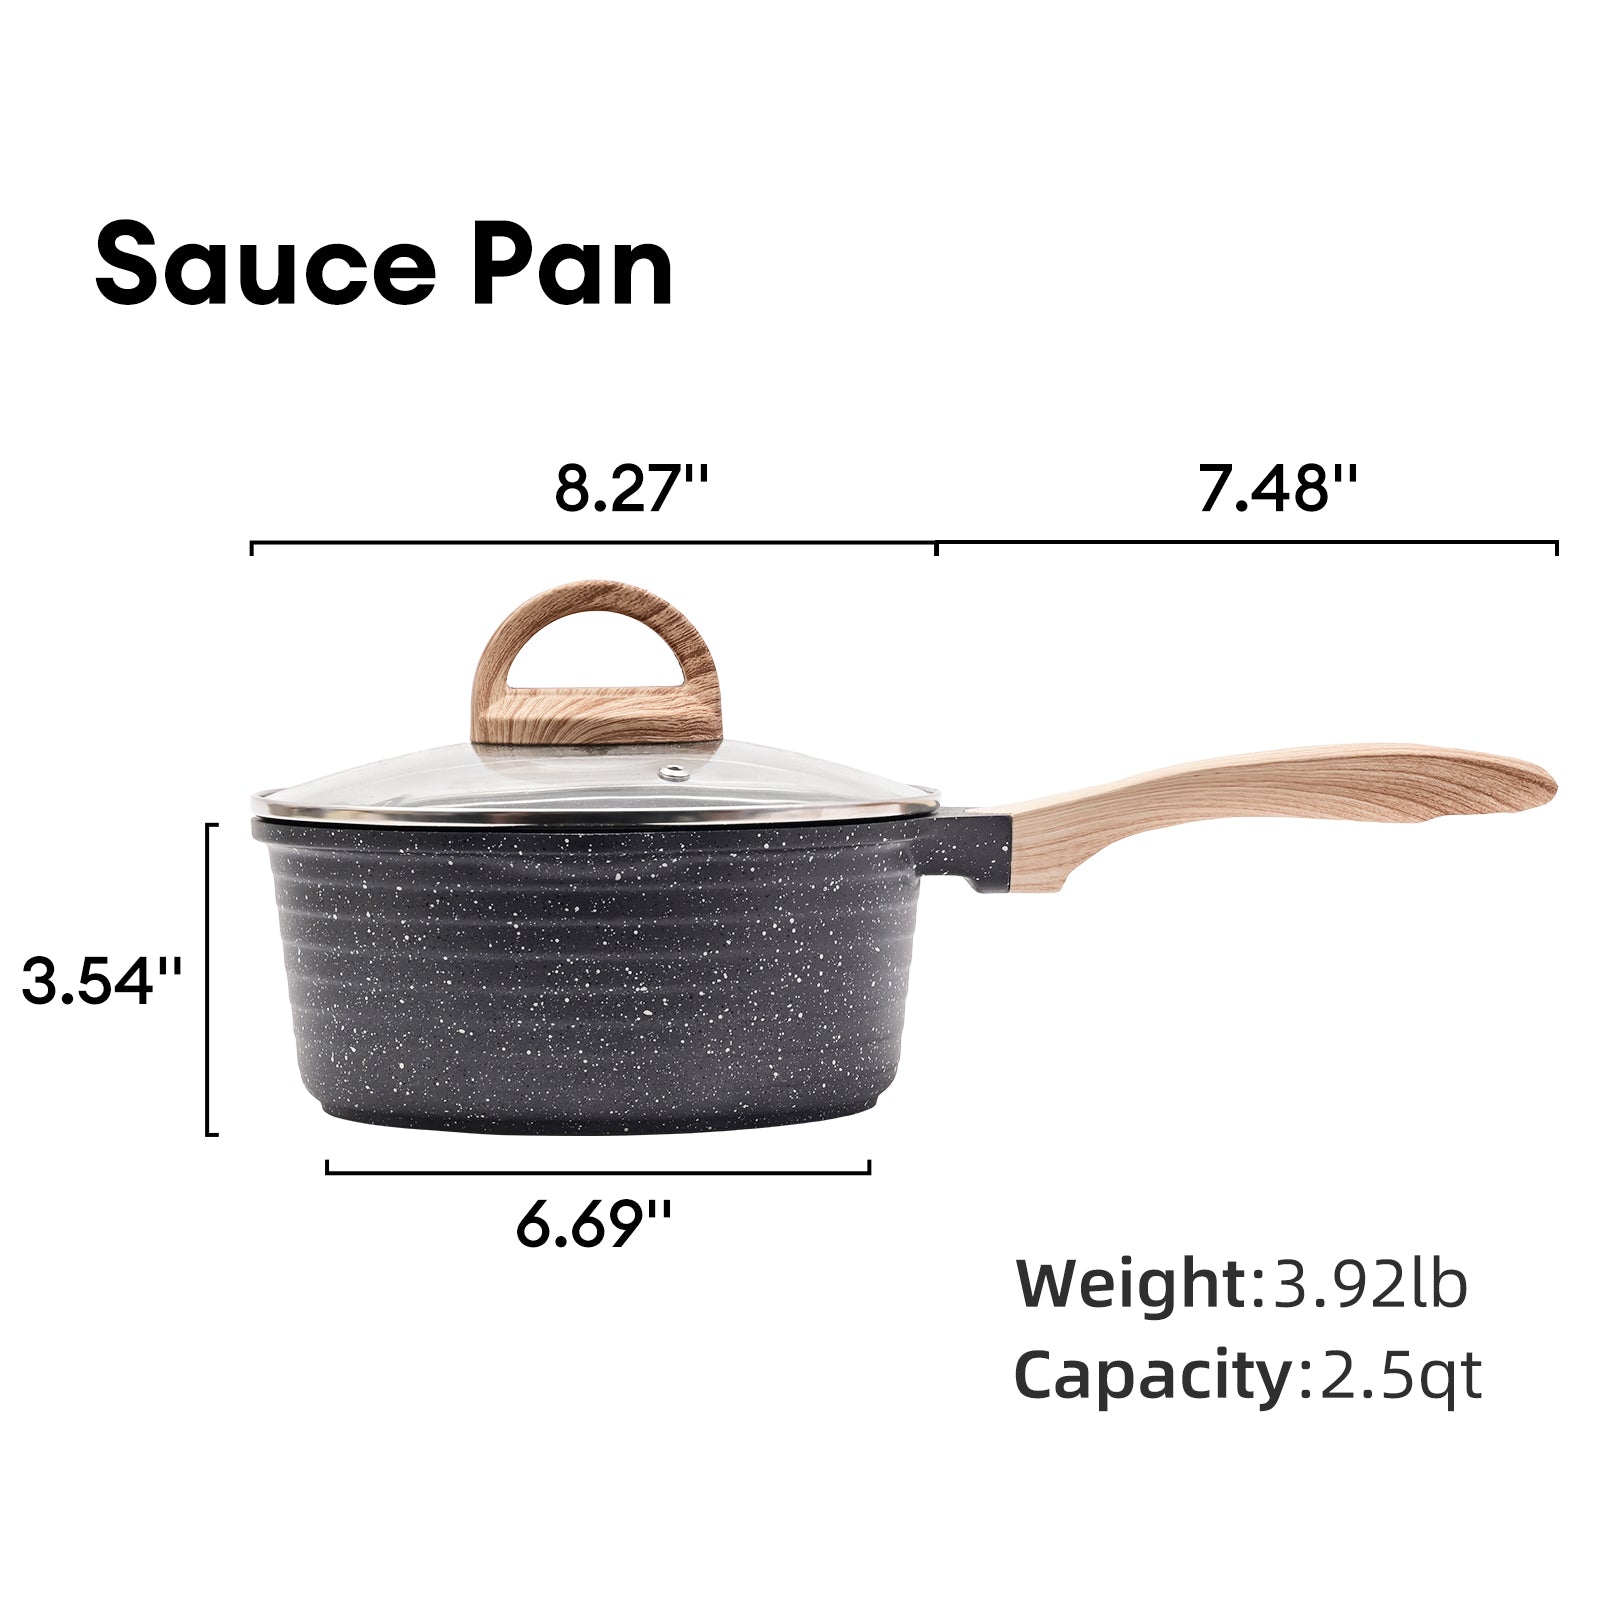 CAROTE 1.5 Quart Saucepan with Lid Small Nonstick Sauce Pot